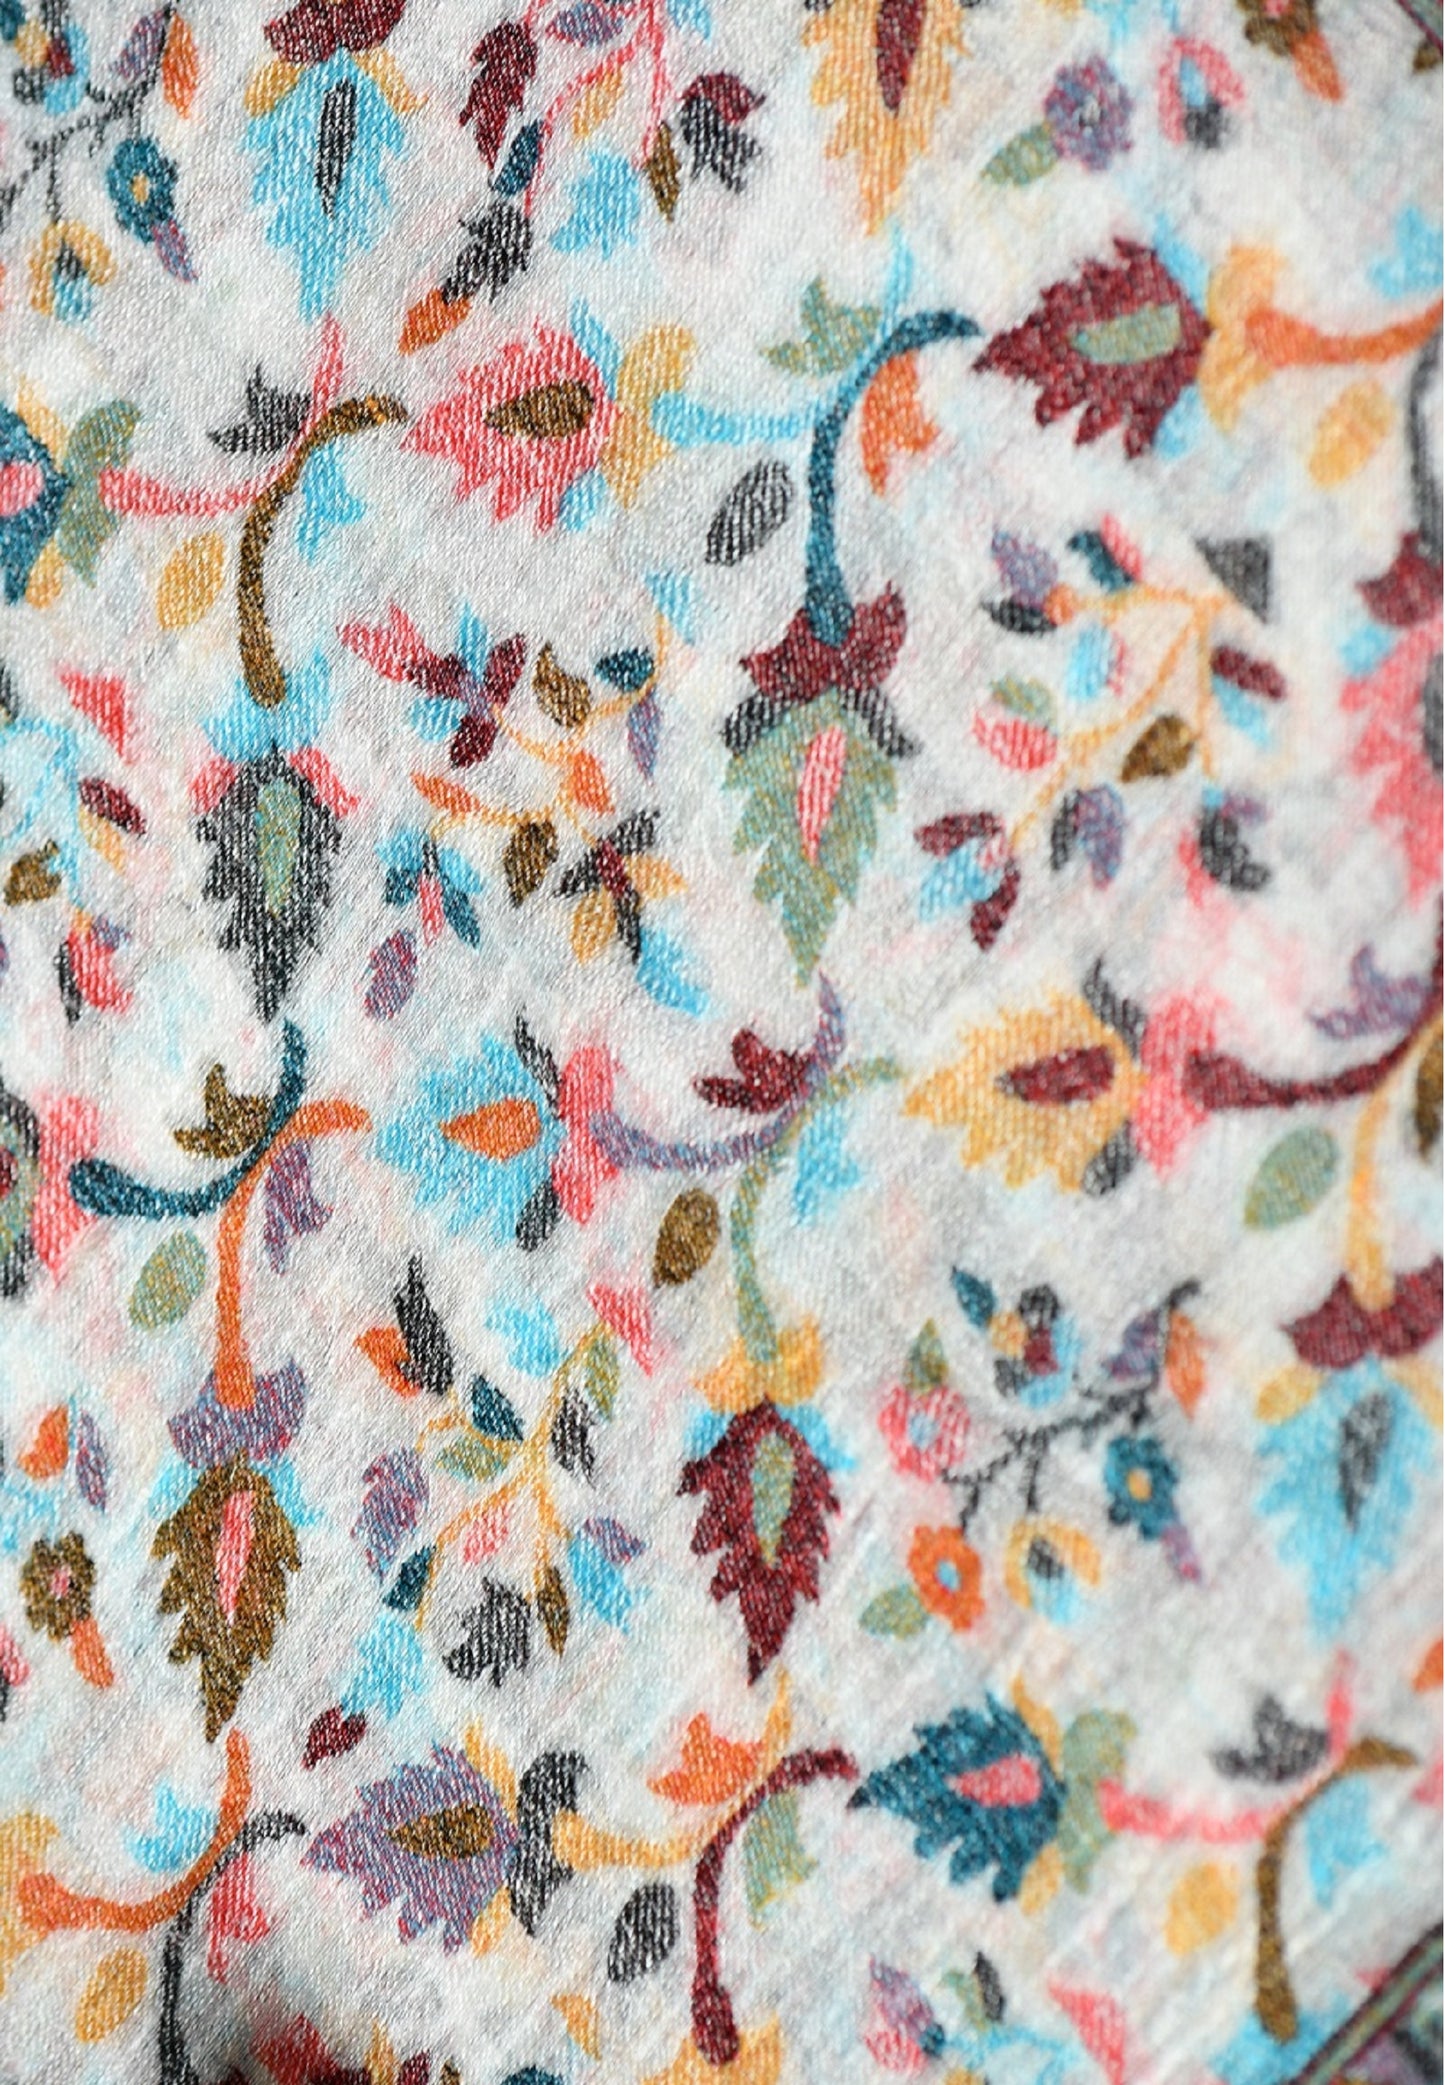 Indischer Kani Kaschmir & Seidenmix Schal- mit feiner Oberfläche aus leichtem Material, farbig gewoben